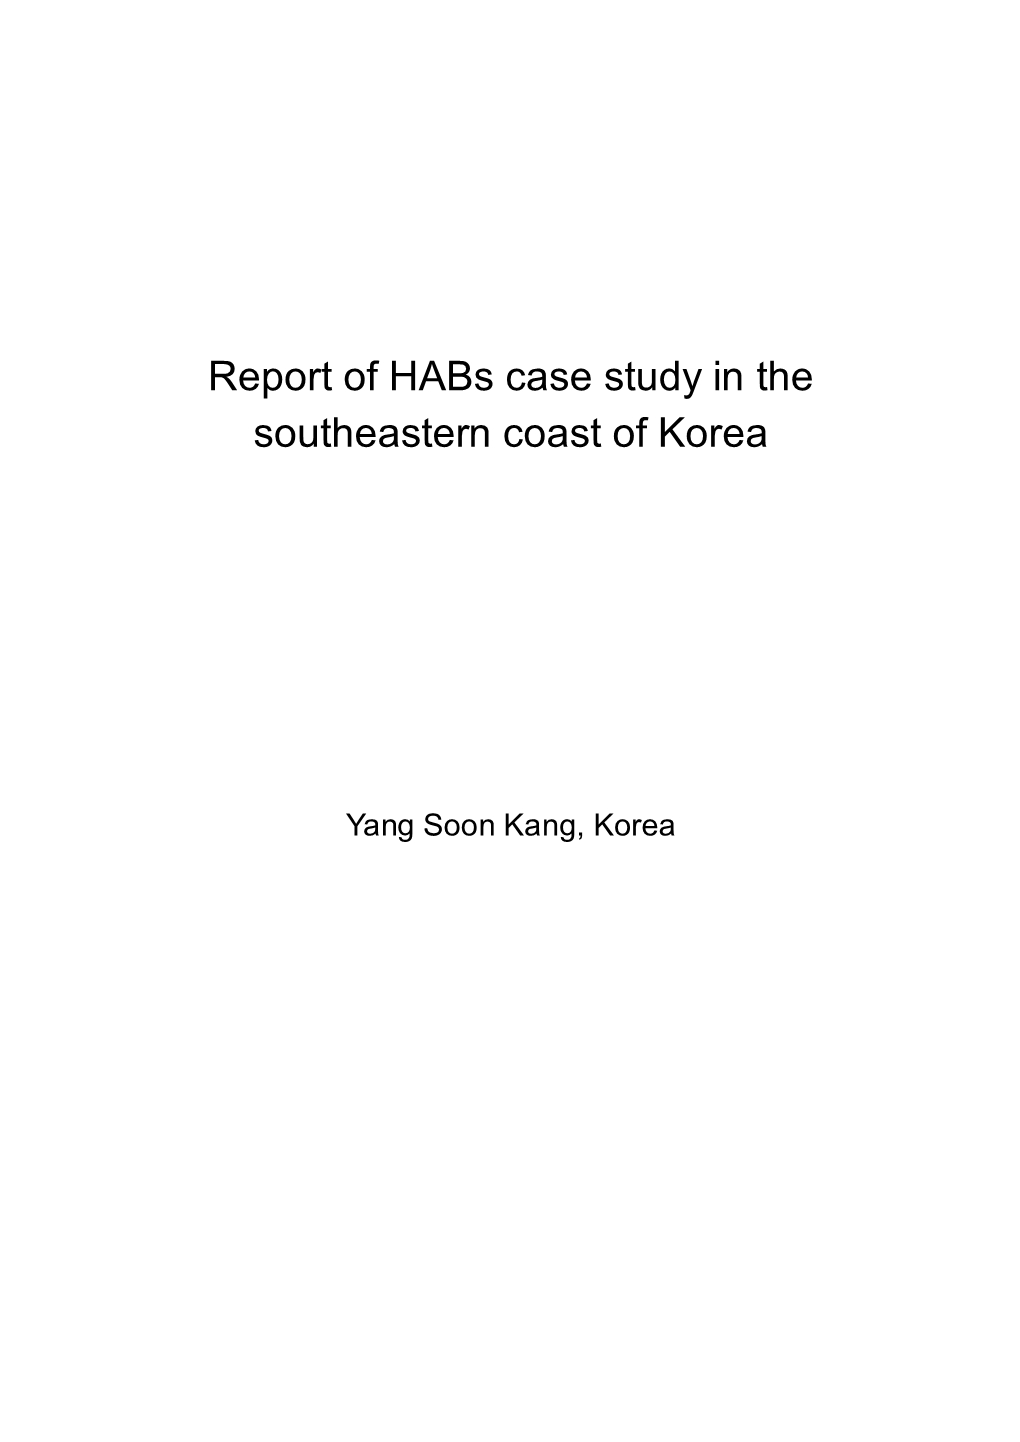 HAB Case Study Report in Korea